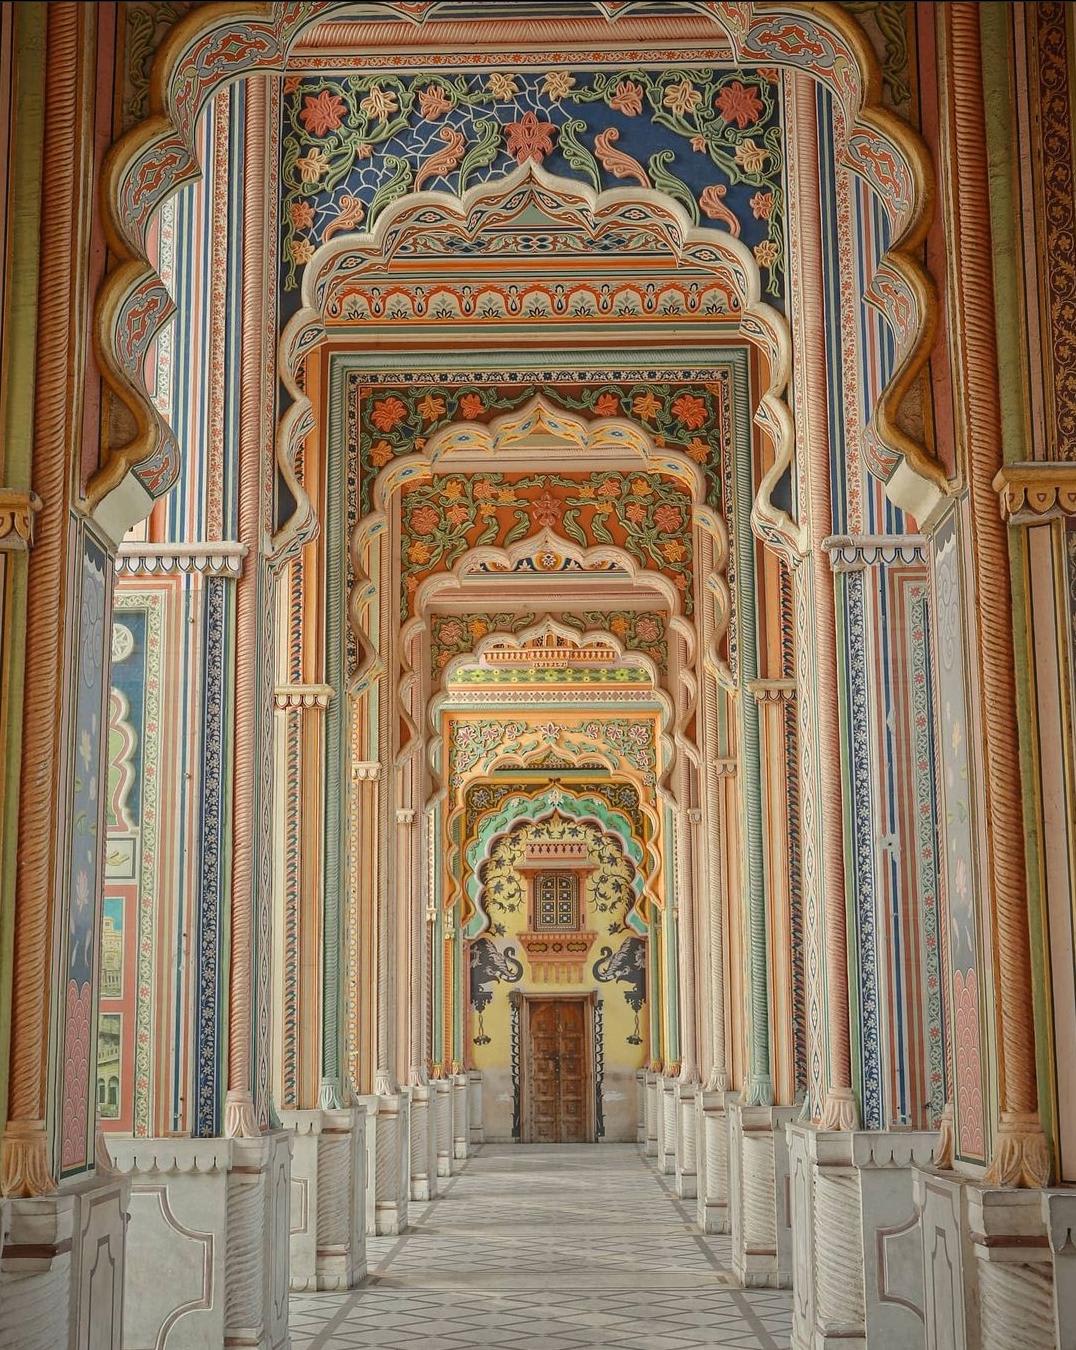 The Patrika Gate in Jaipur, India